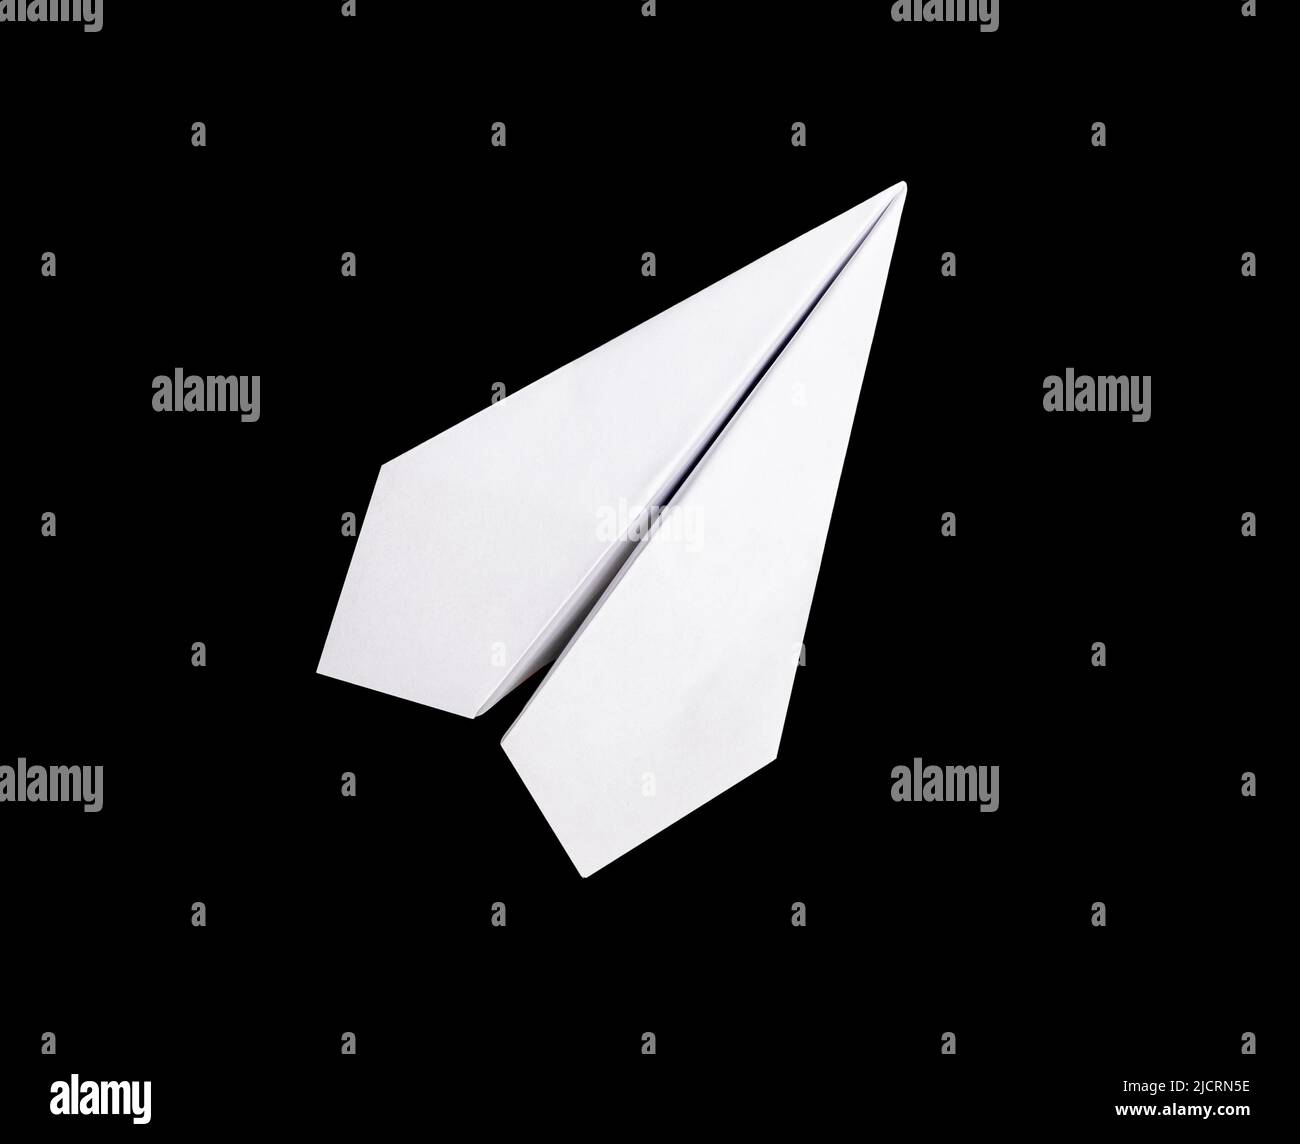 White origami plane on black background. Paper folding art. Handmade object. High quality photo Stock Photo